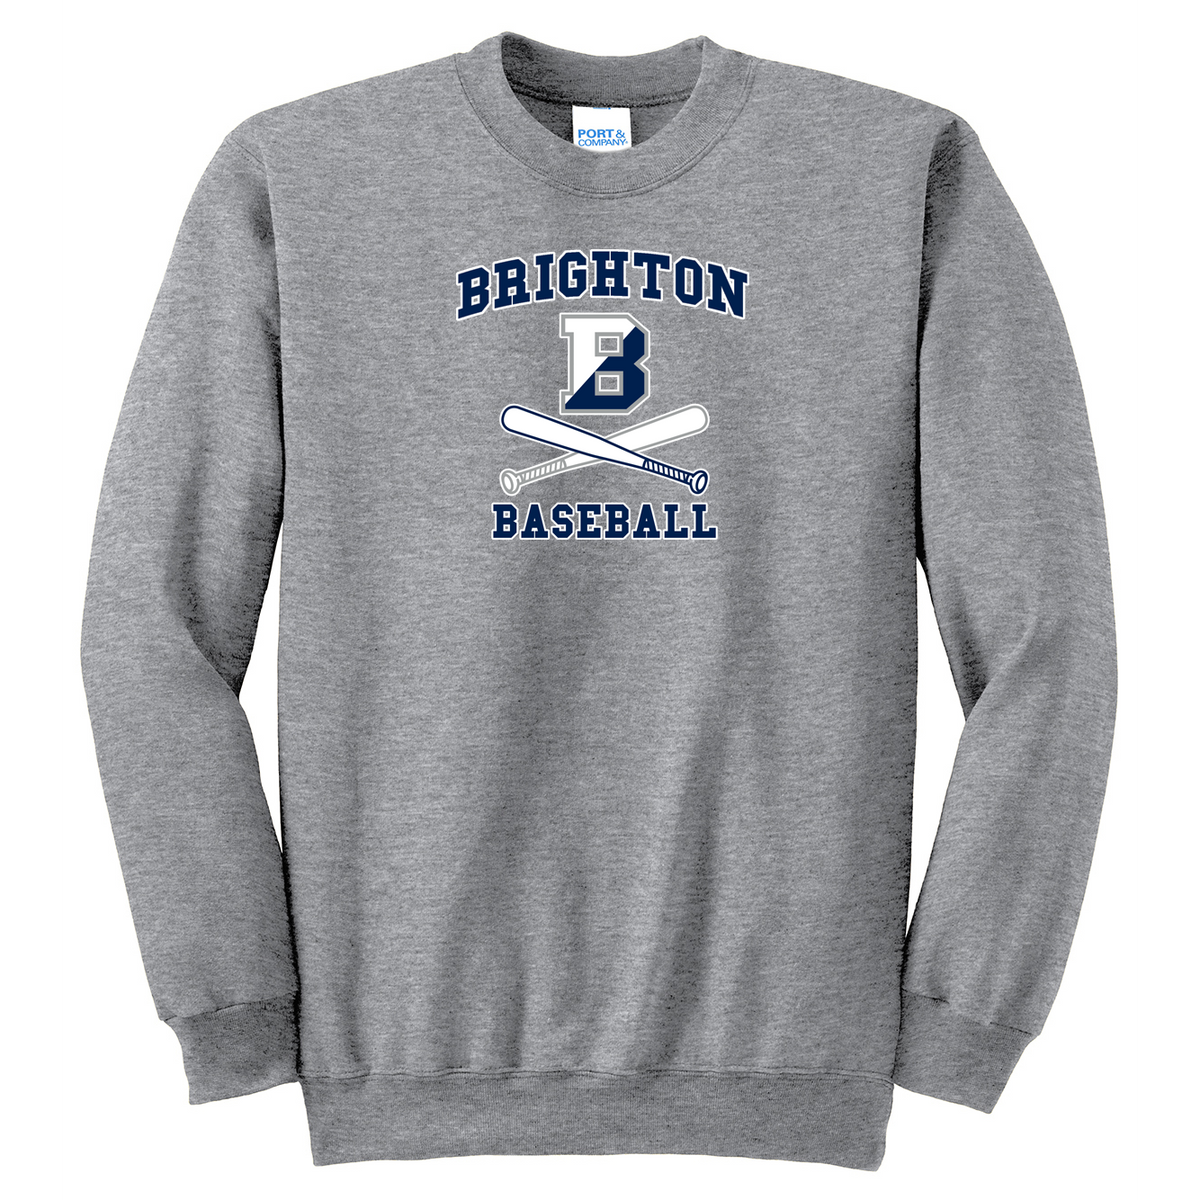 Brighton Baseball Crew Neck Sweater